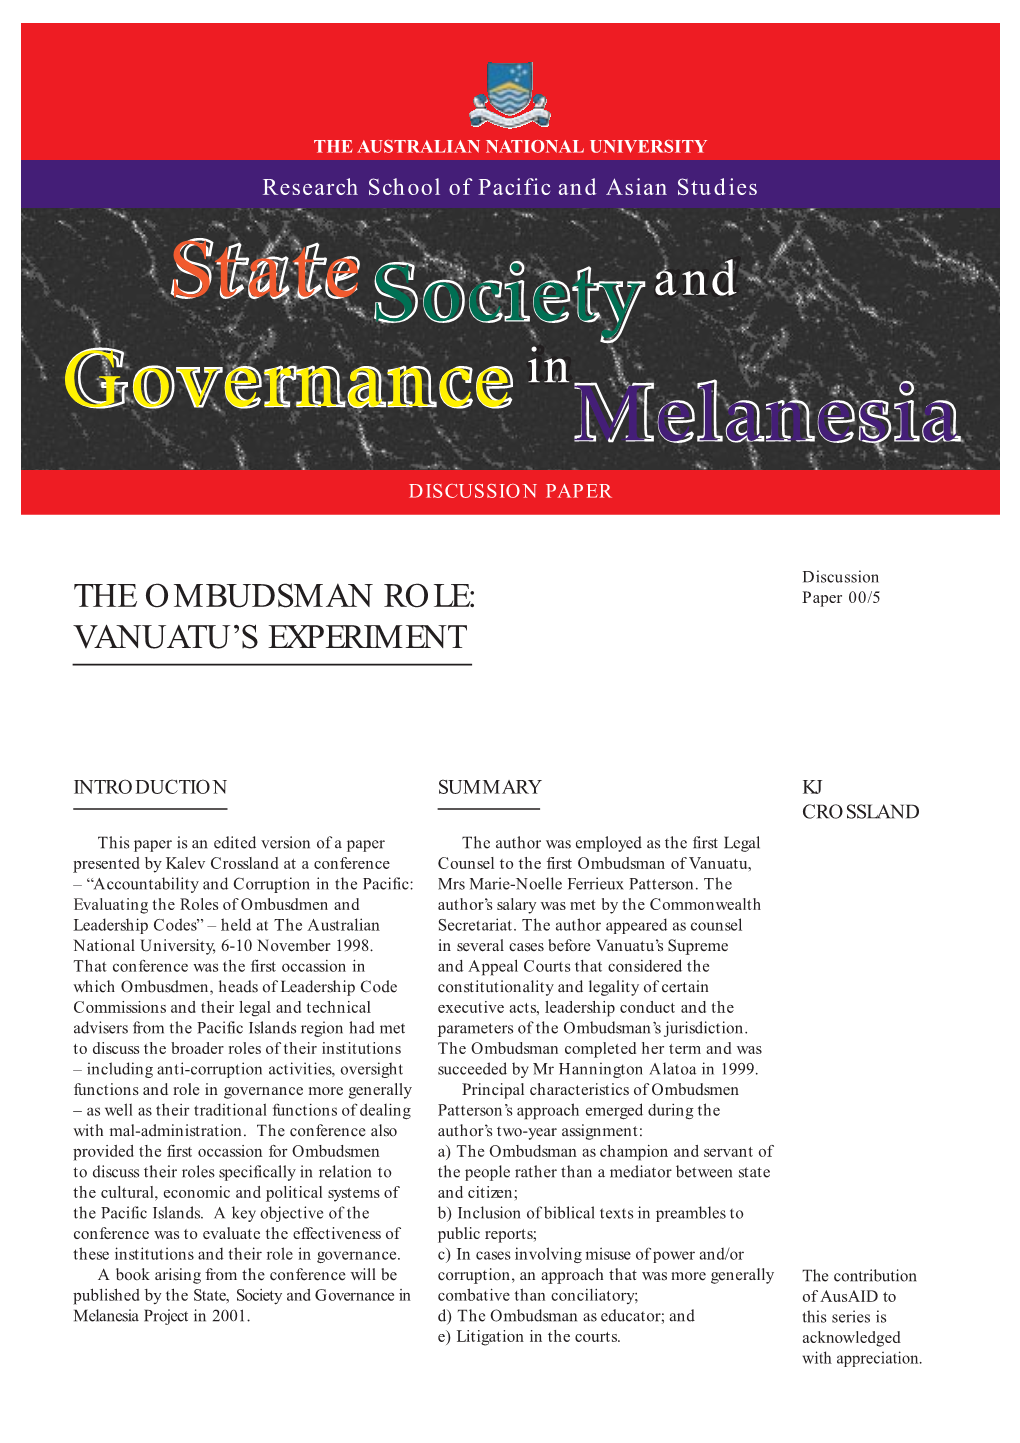 The Ombudsman Role: Vanuatu's Experiment